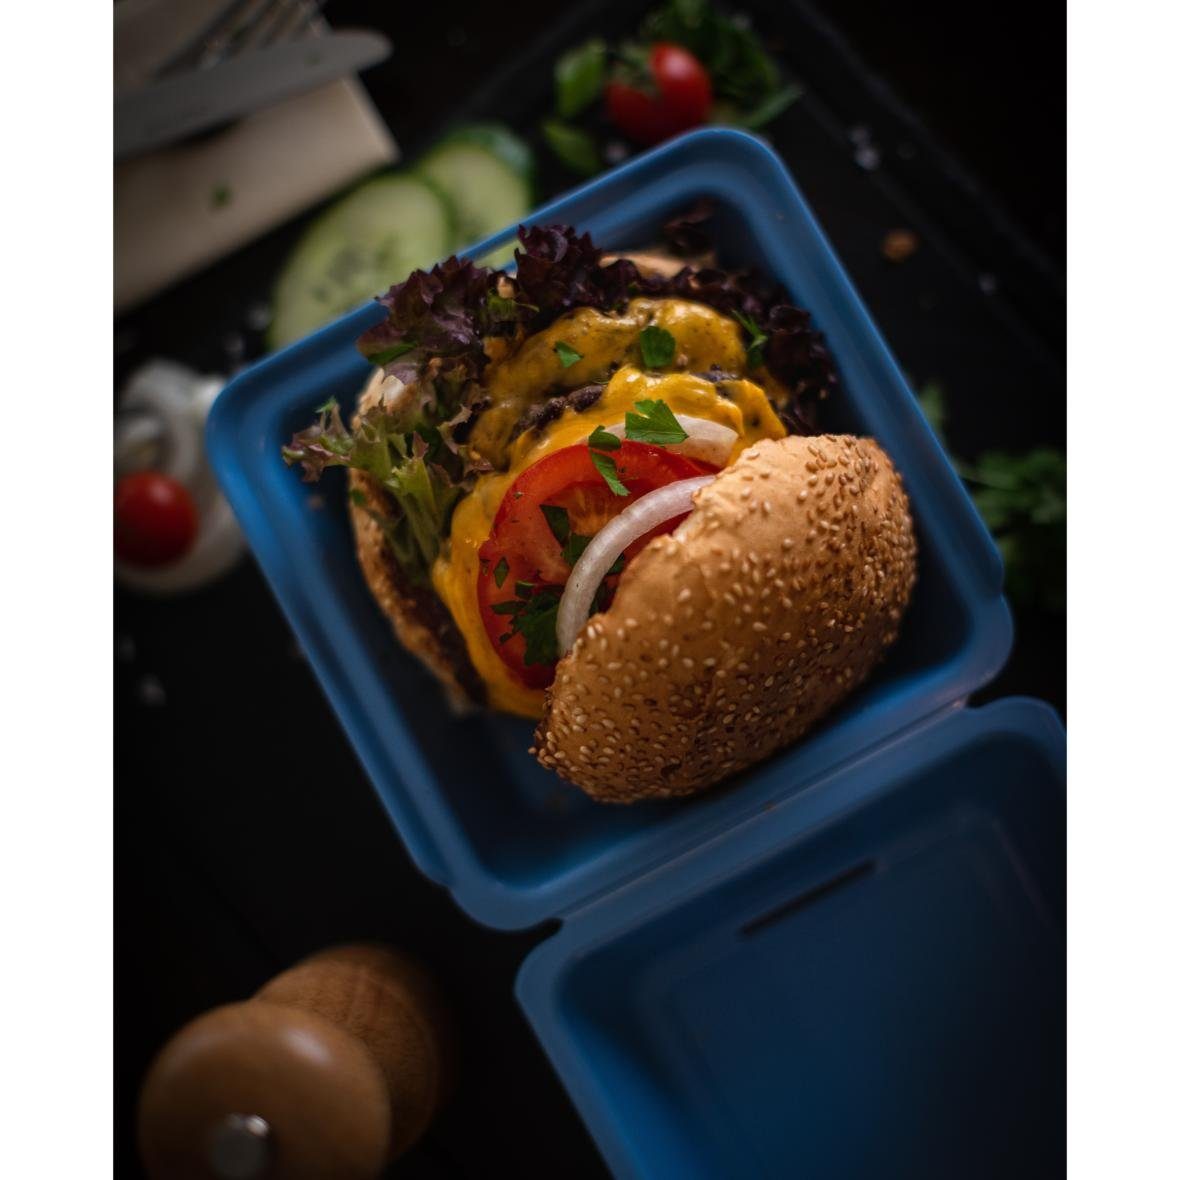 Burgerbox elasto "Take Verpackung away" Vorratsdose